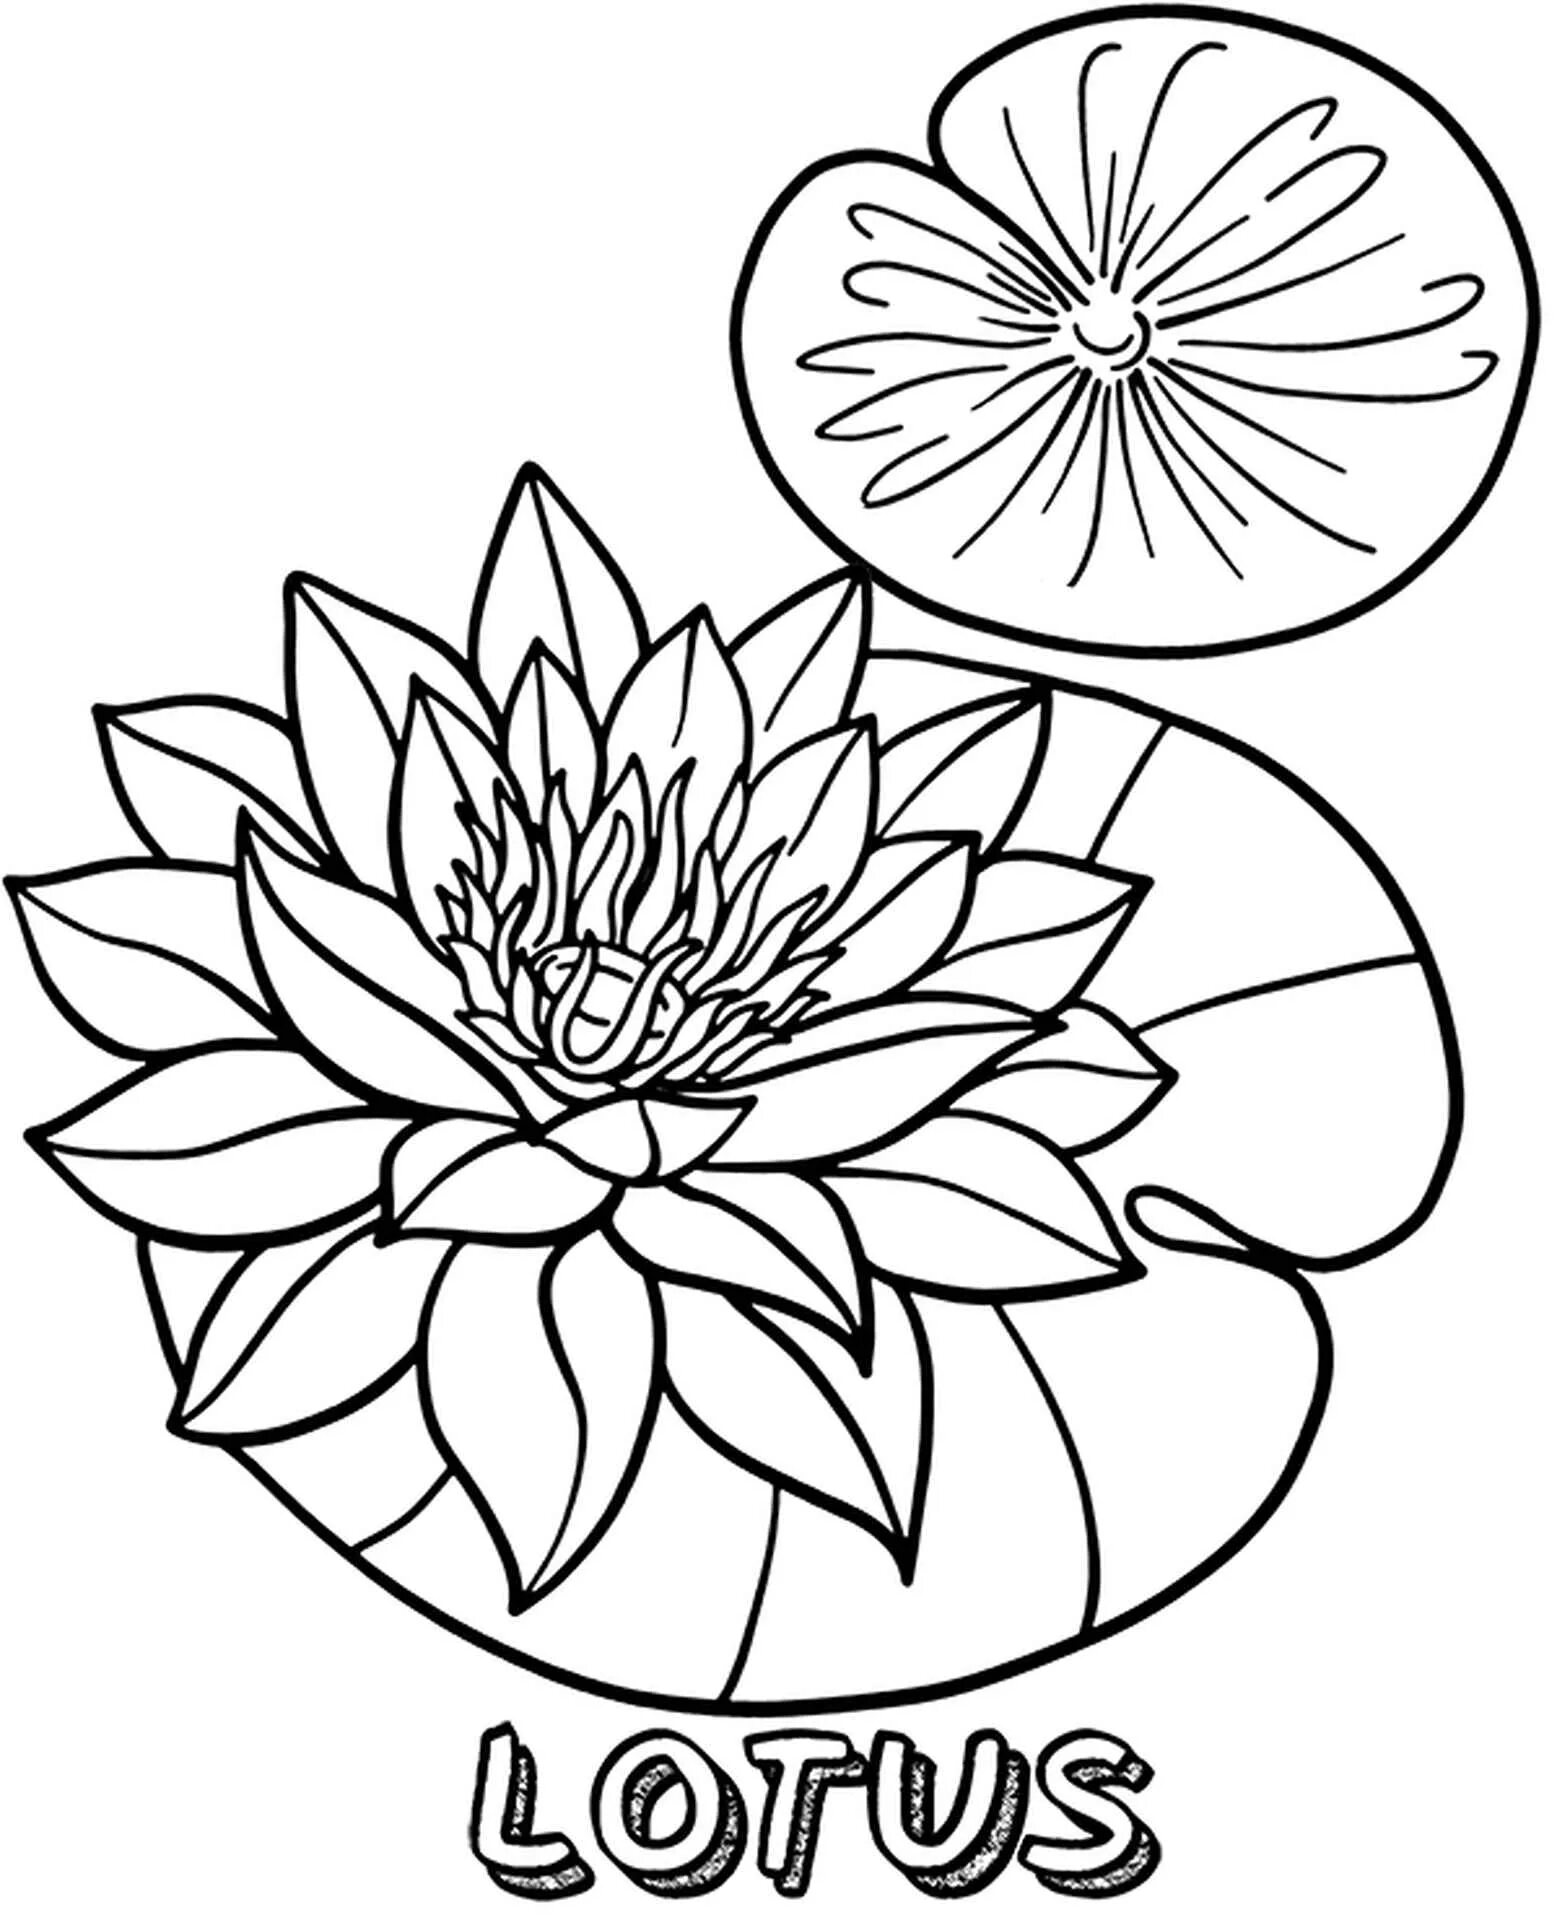 Lotus flower #1